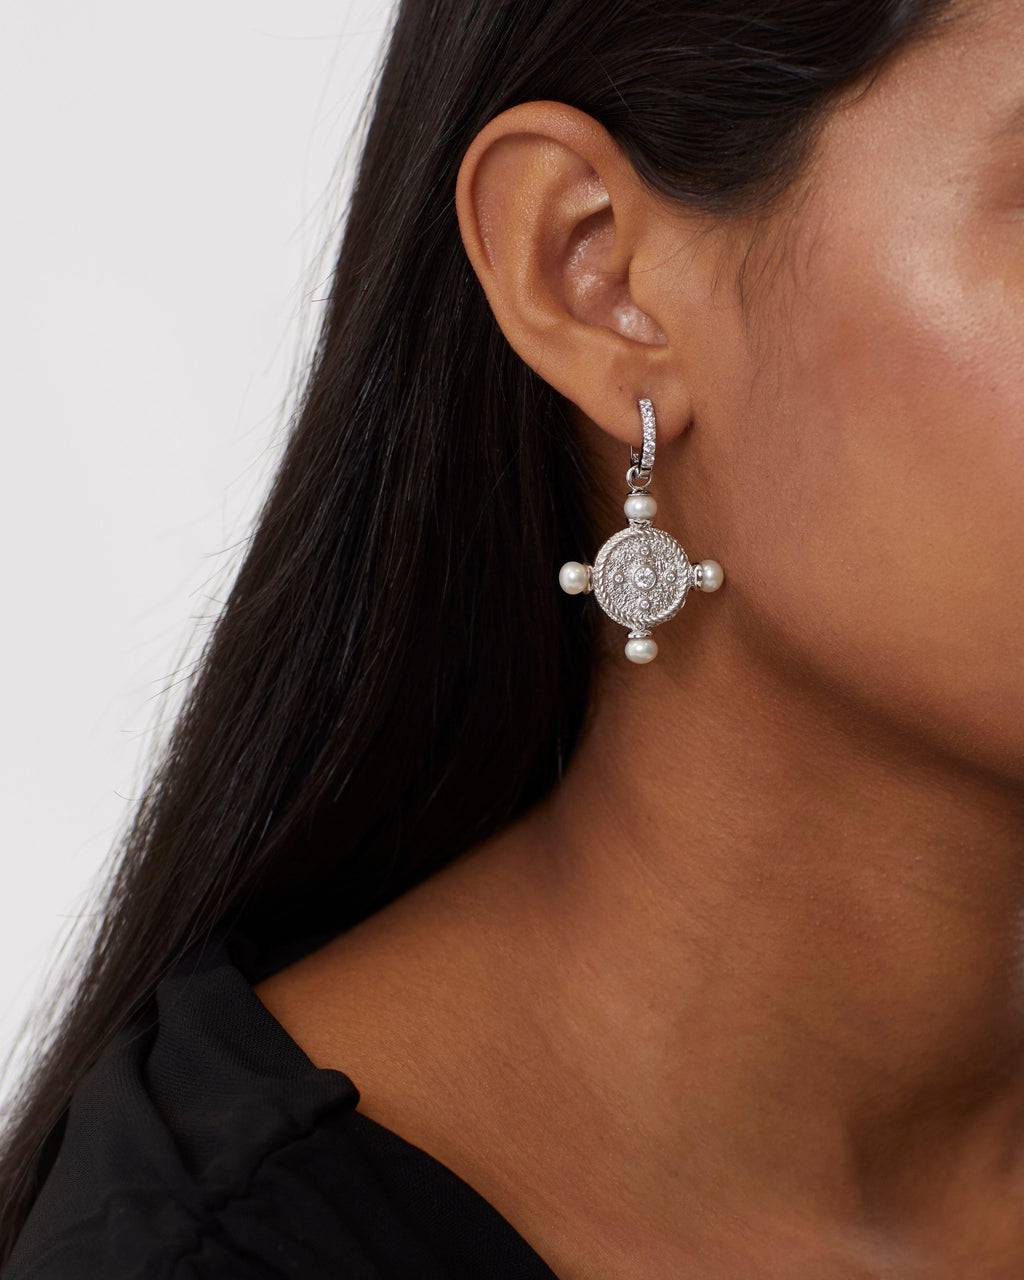 The New Romantics Silver Pearl Earrings